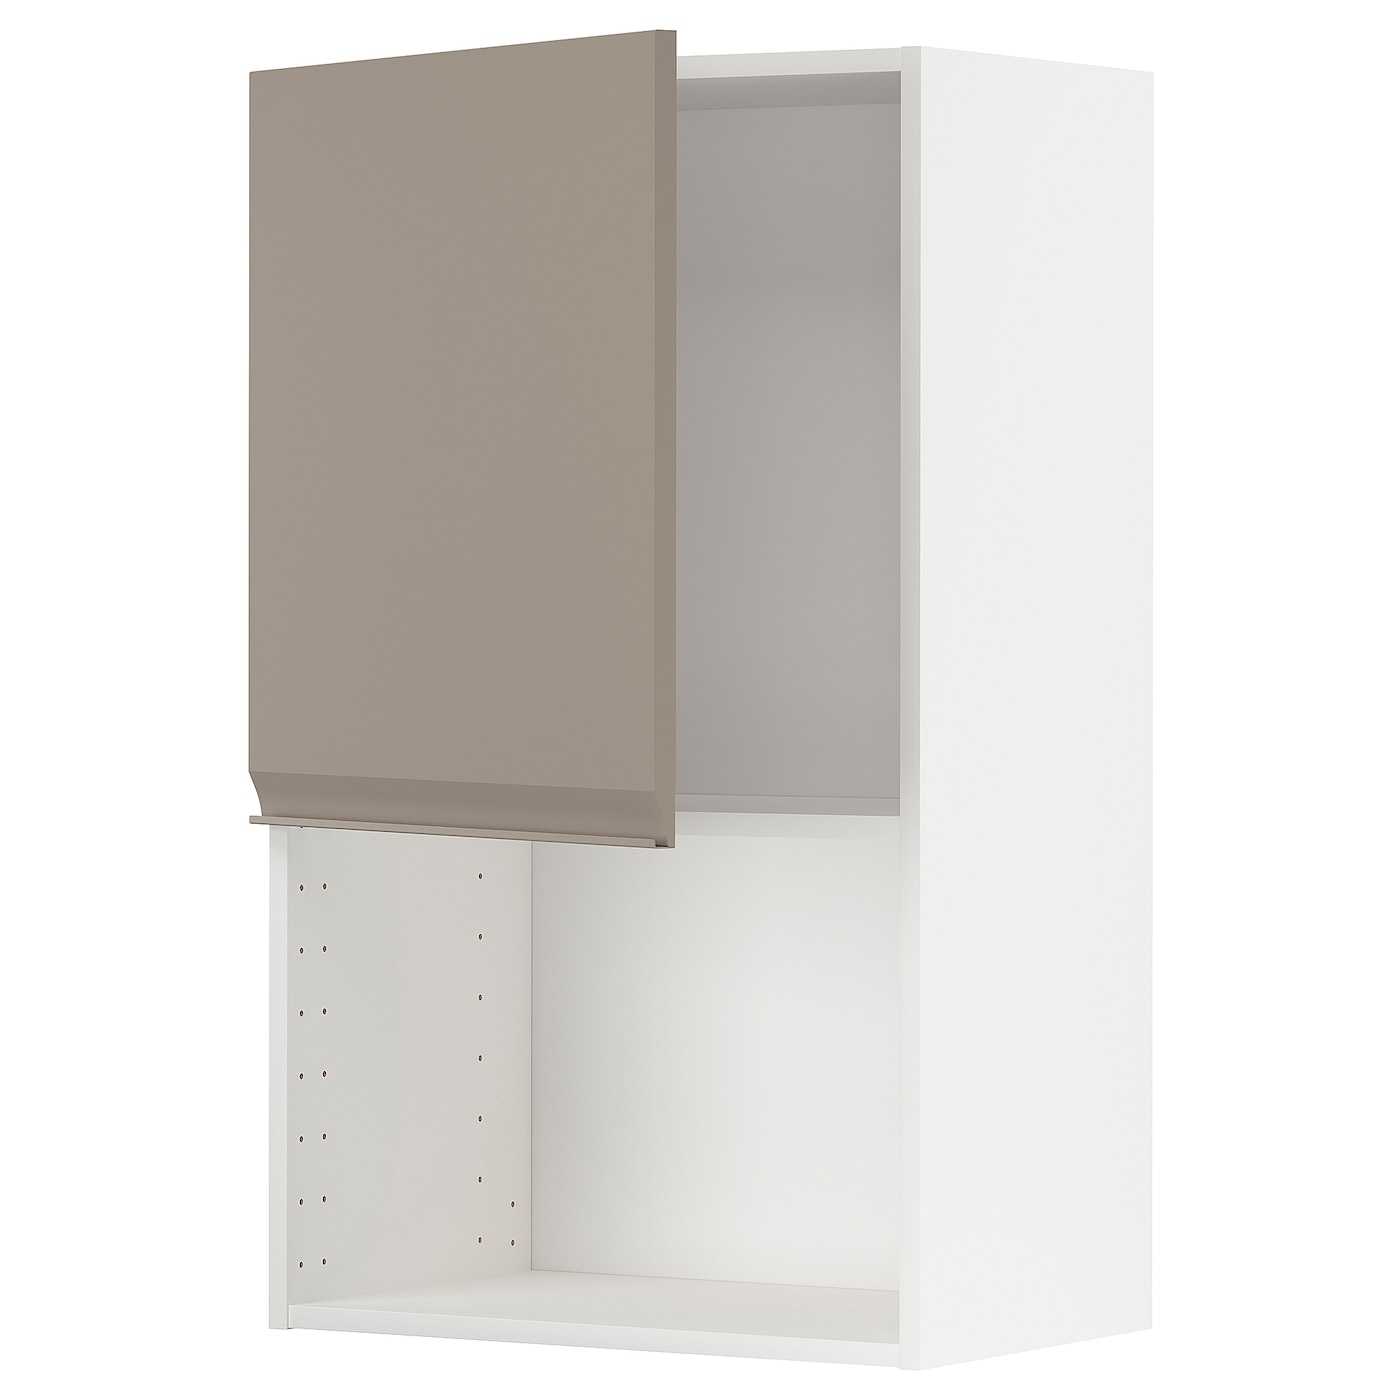 METOD Навесной шкаф - METOD IKEA/ МЕТОД ИКЕА, 100х60 см, белый/светло-коричневый